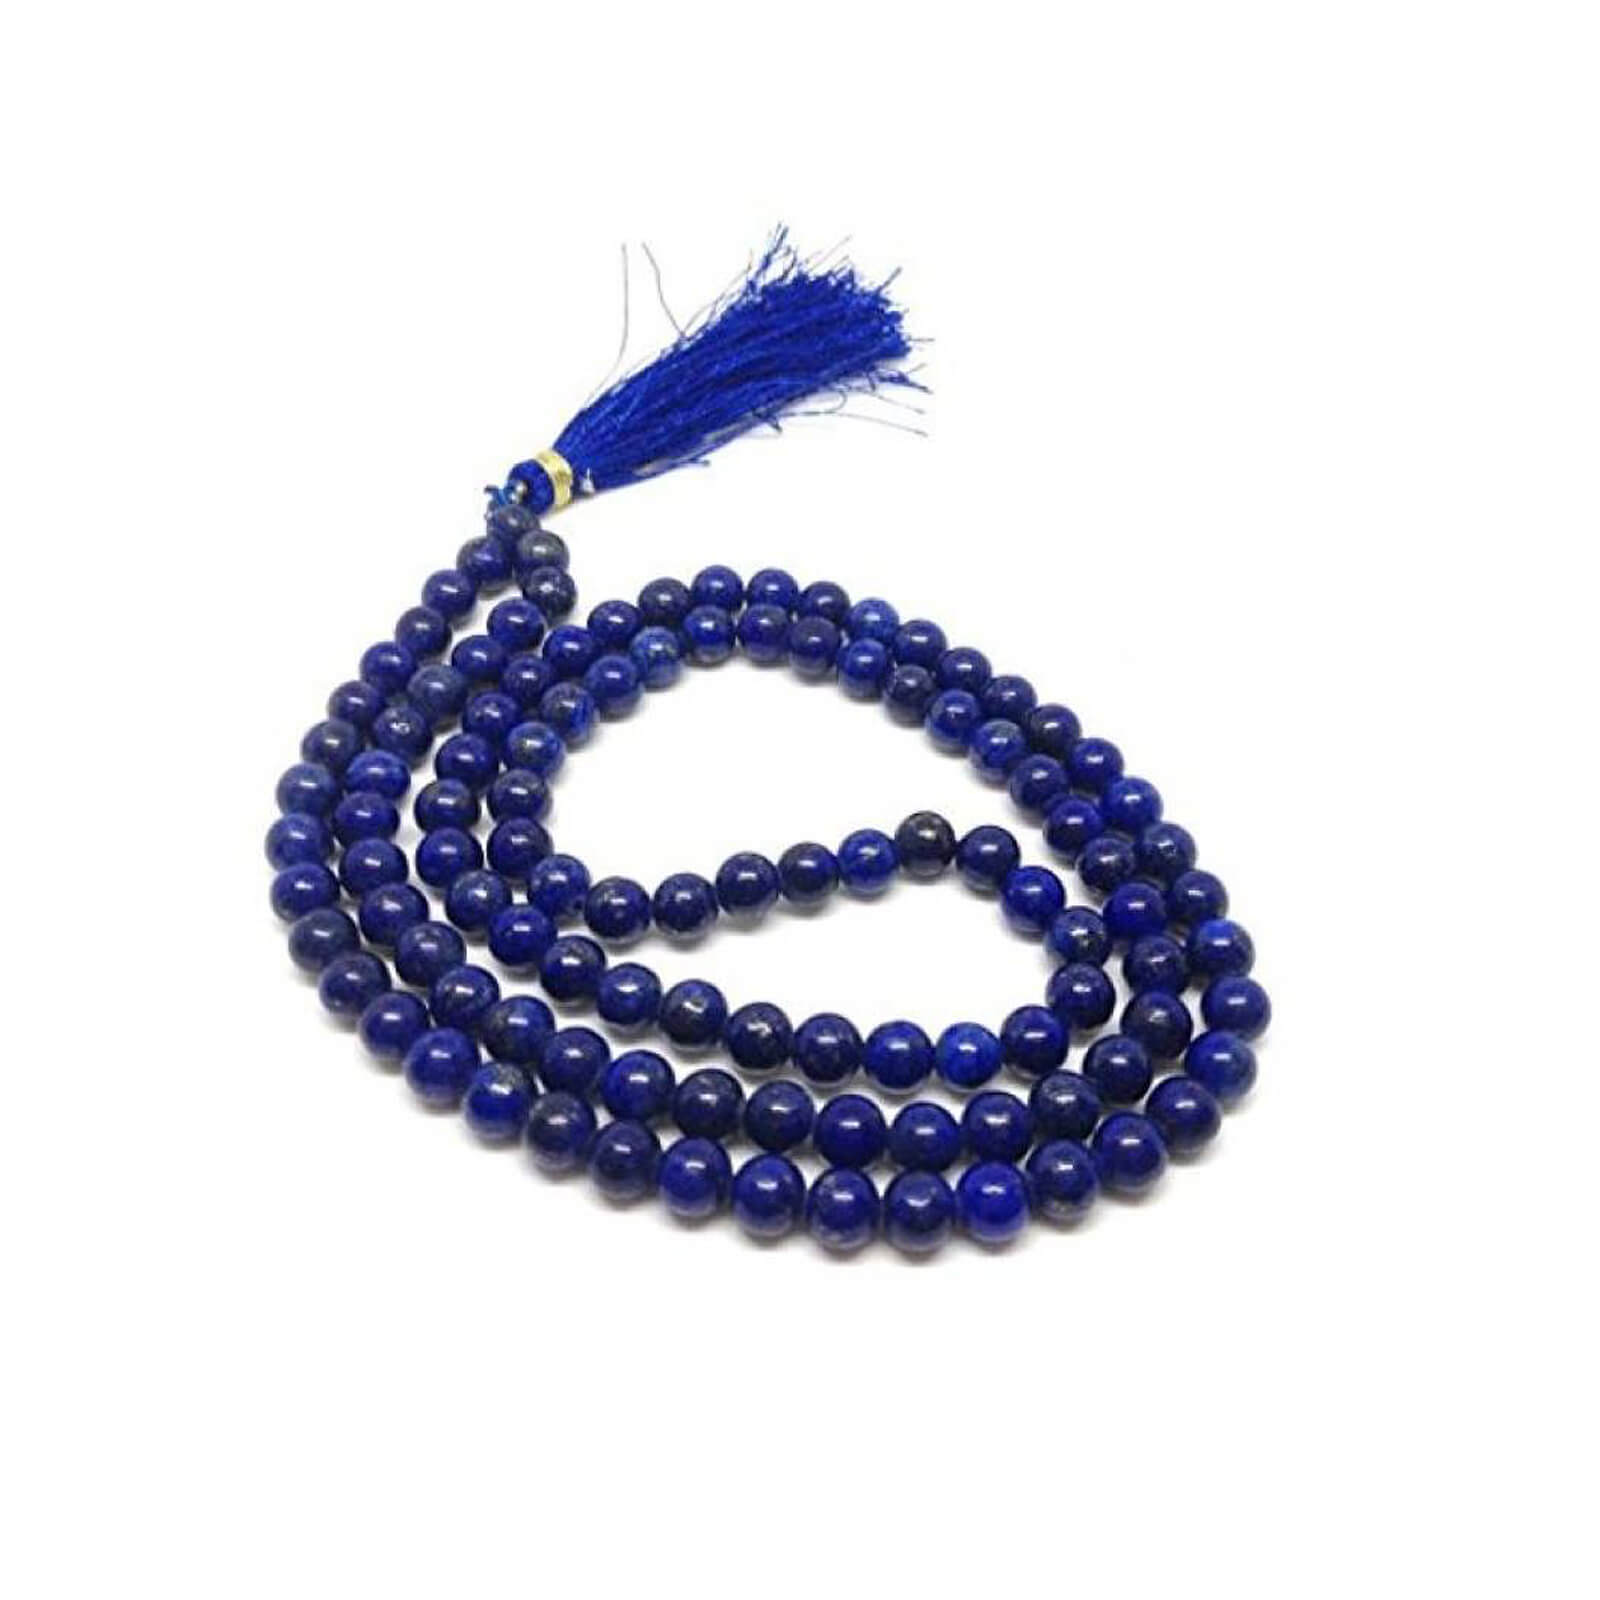 Blue Round Lapis Lazuli Japa Mala 108 Beads at Rs 1200/piece in Jaipur |  ID: 22855704173